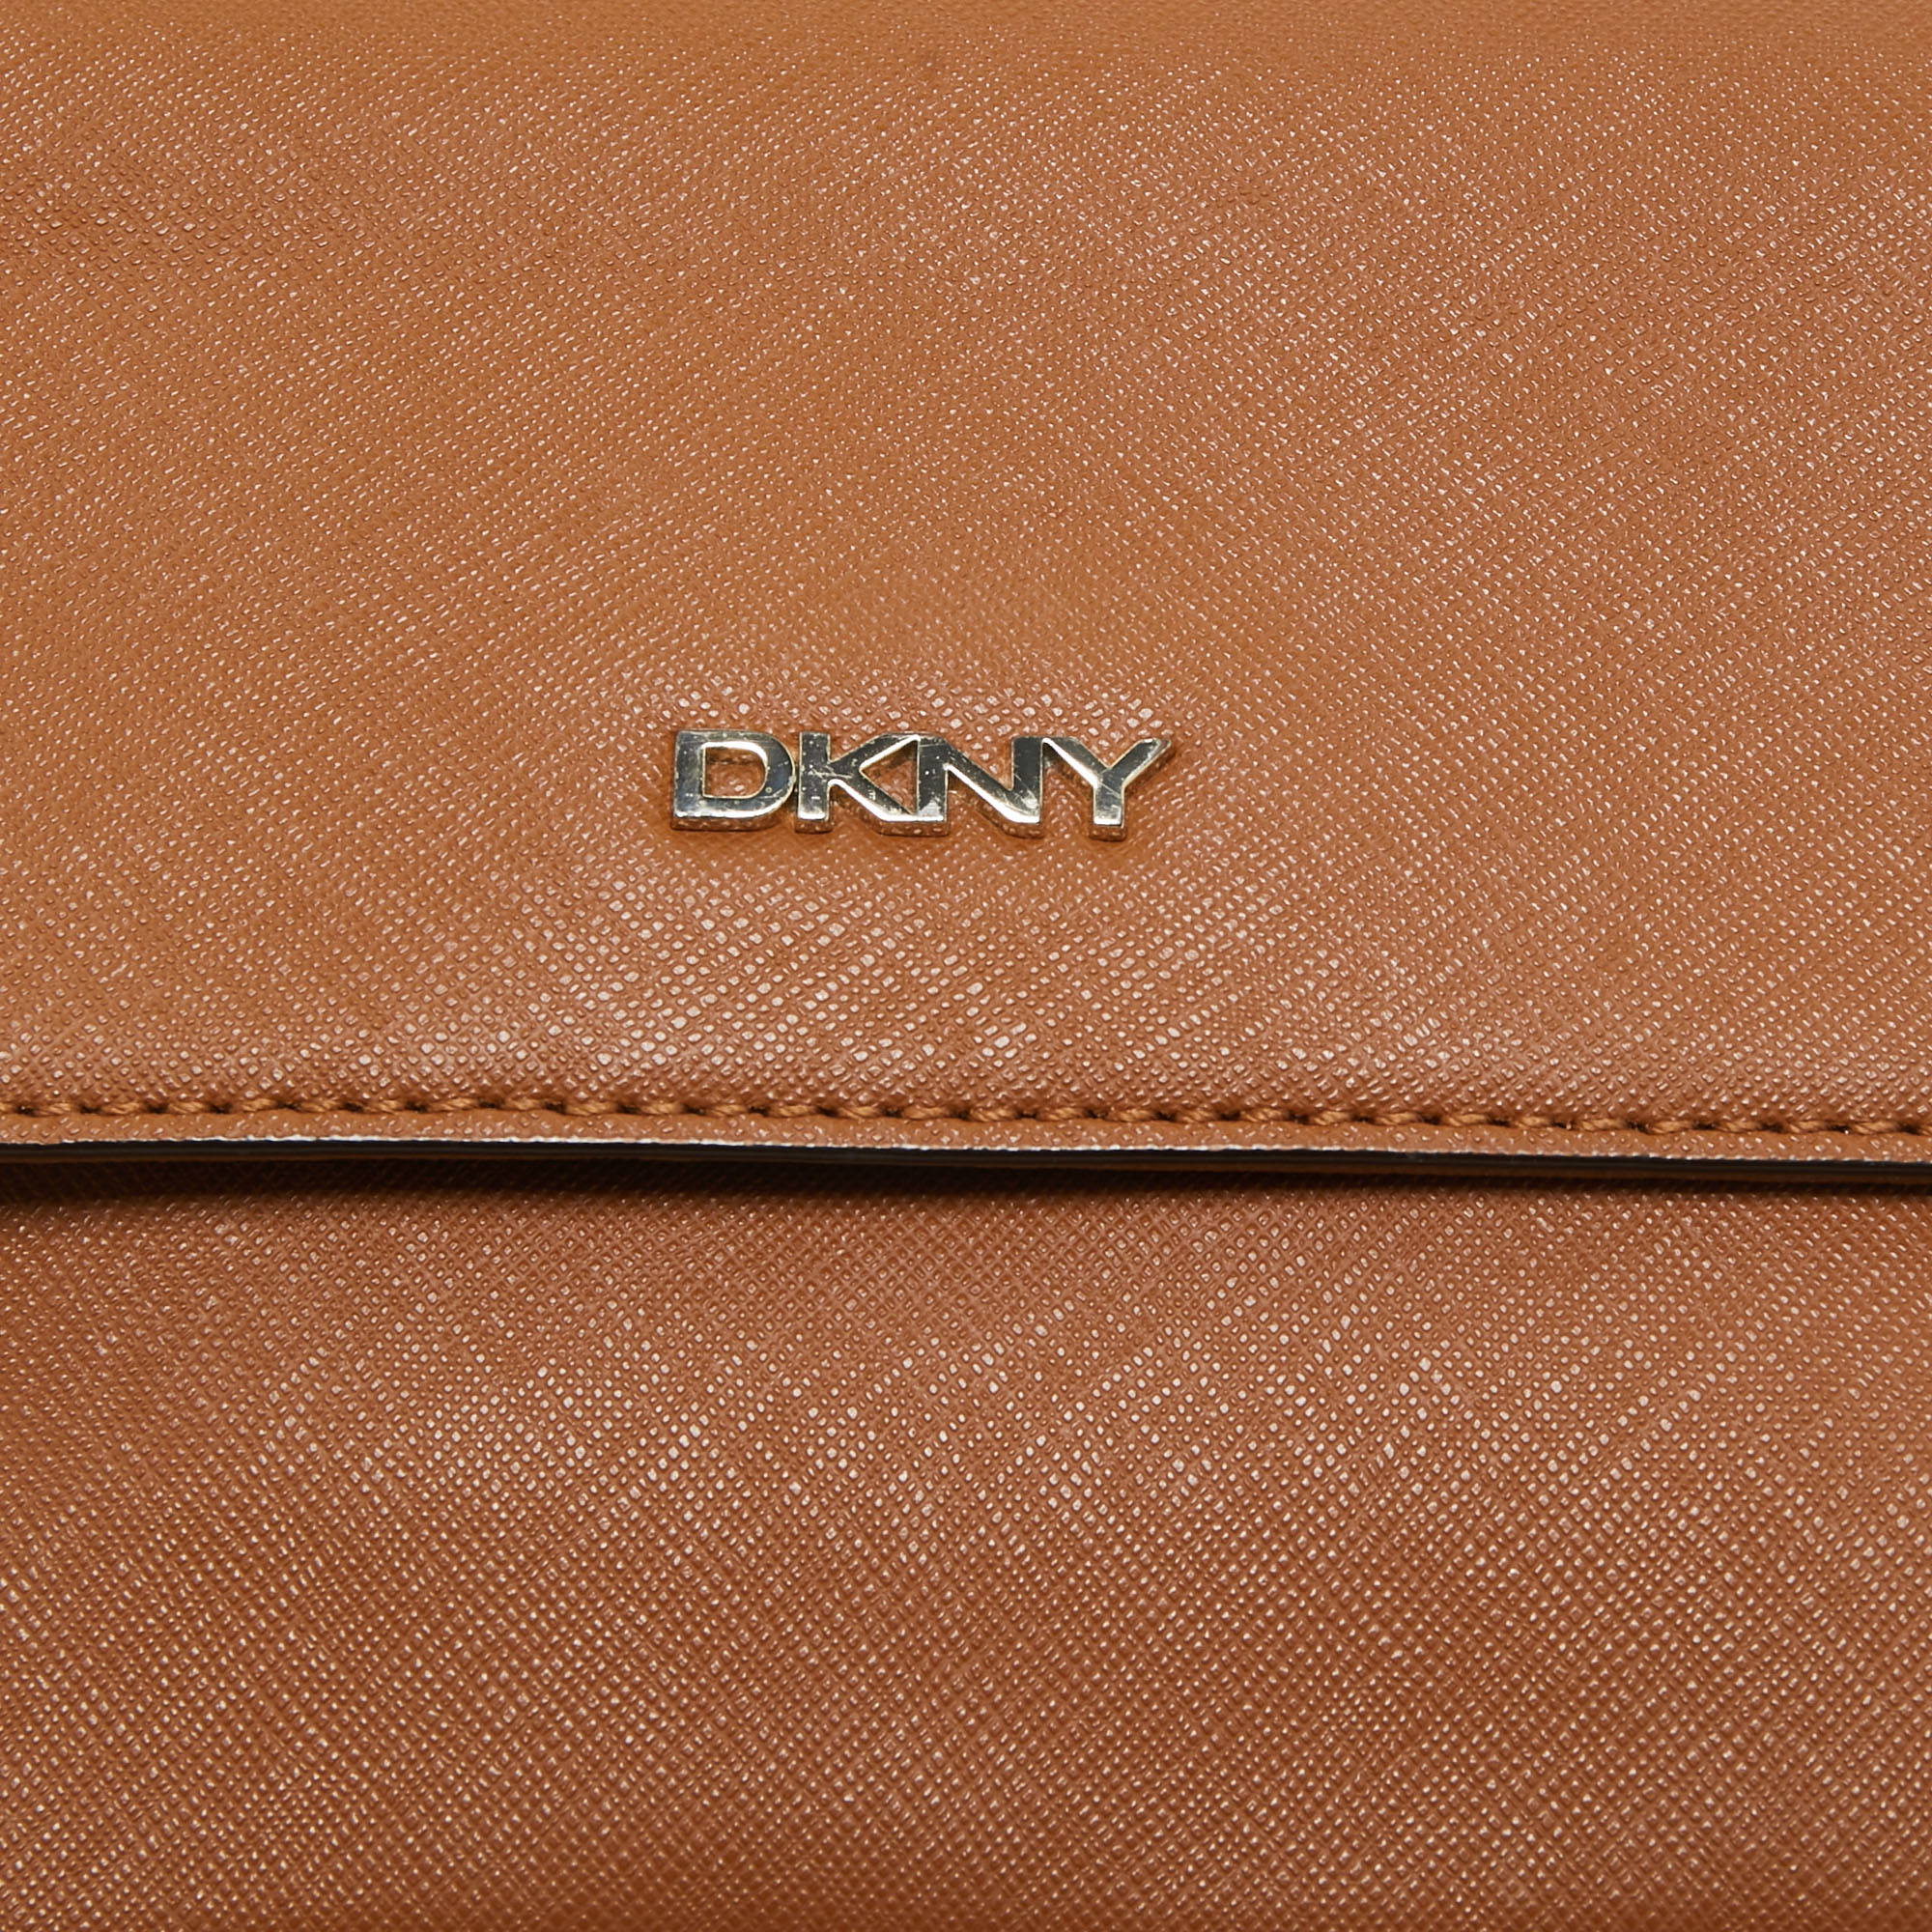 DKNY Brown Leather Bryant Flap Crossbody Bag